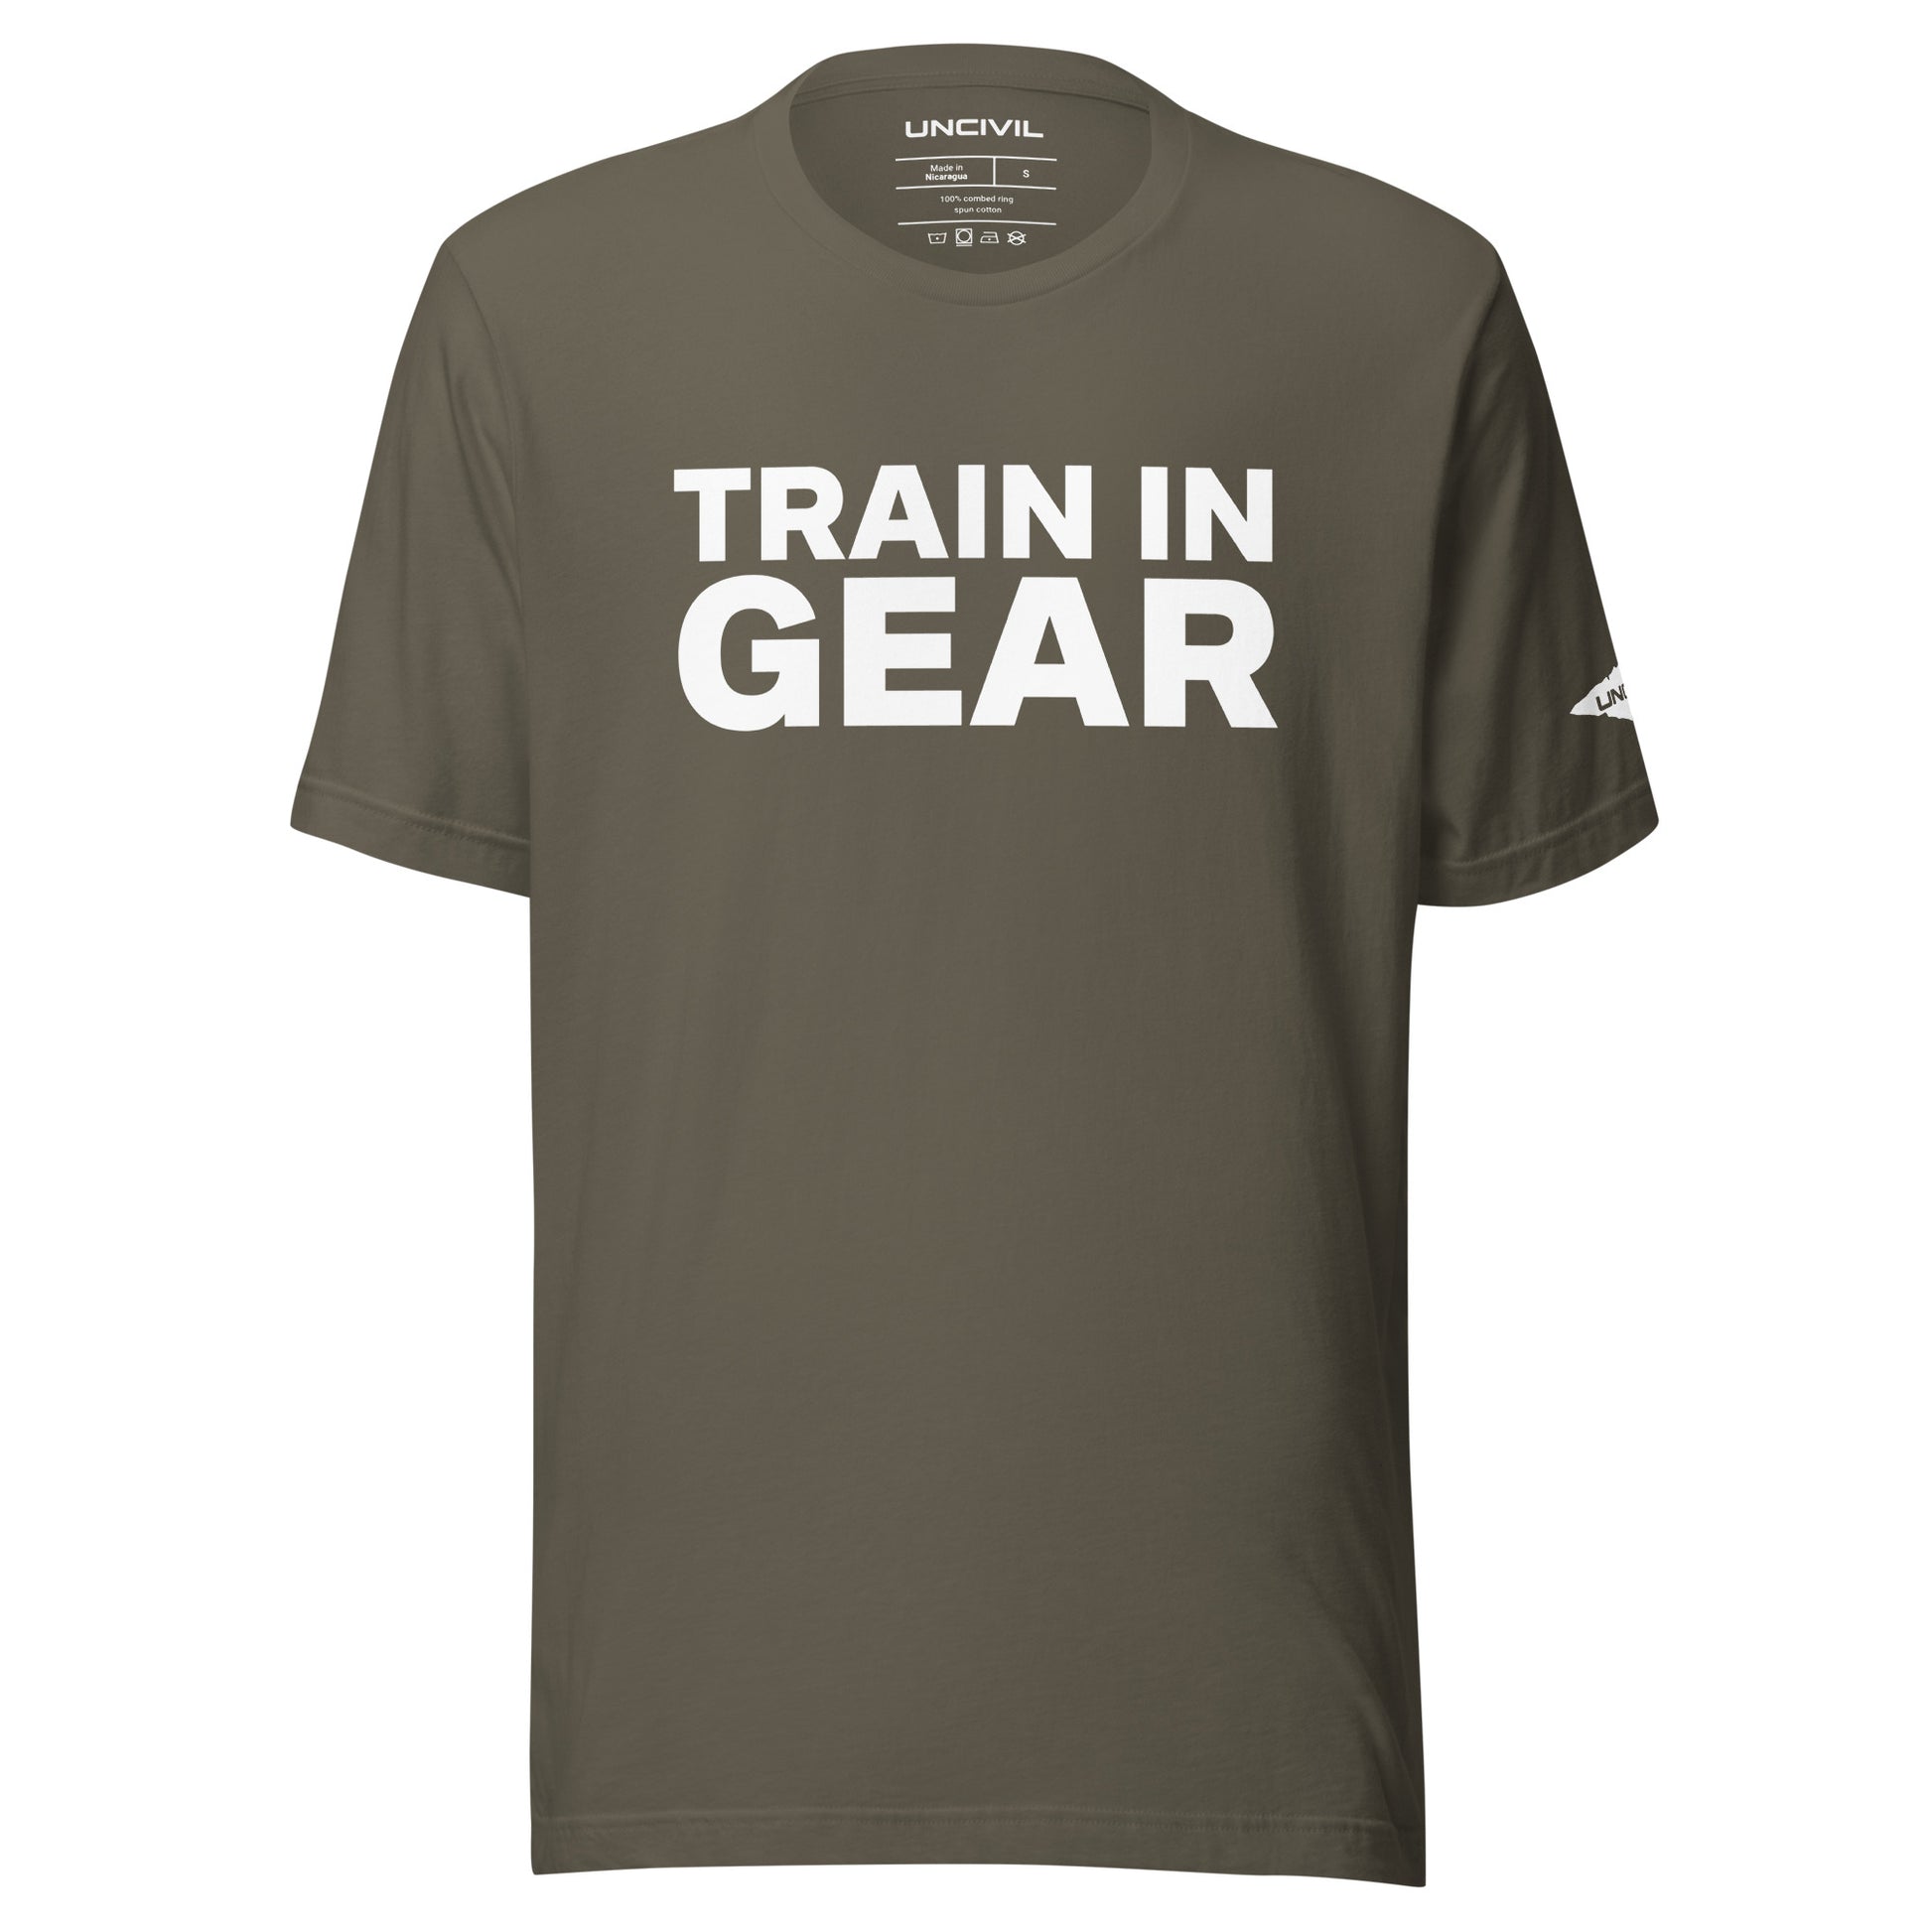 Train in Gear Firefighter shirt. Army Green Unisex t-shirt.